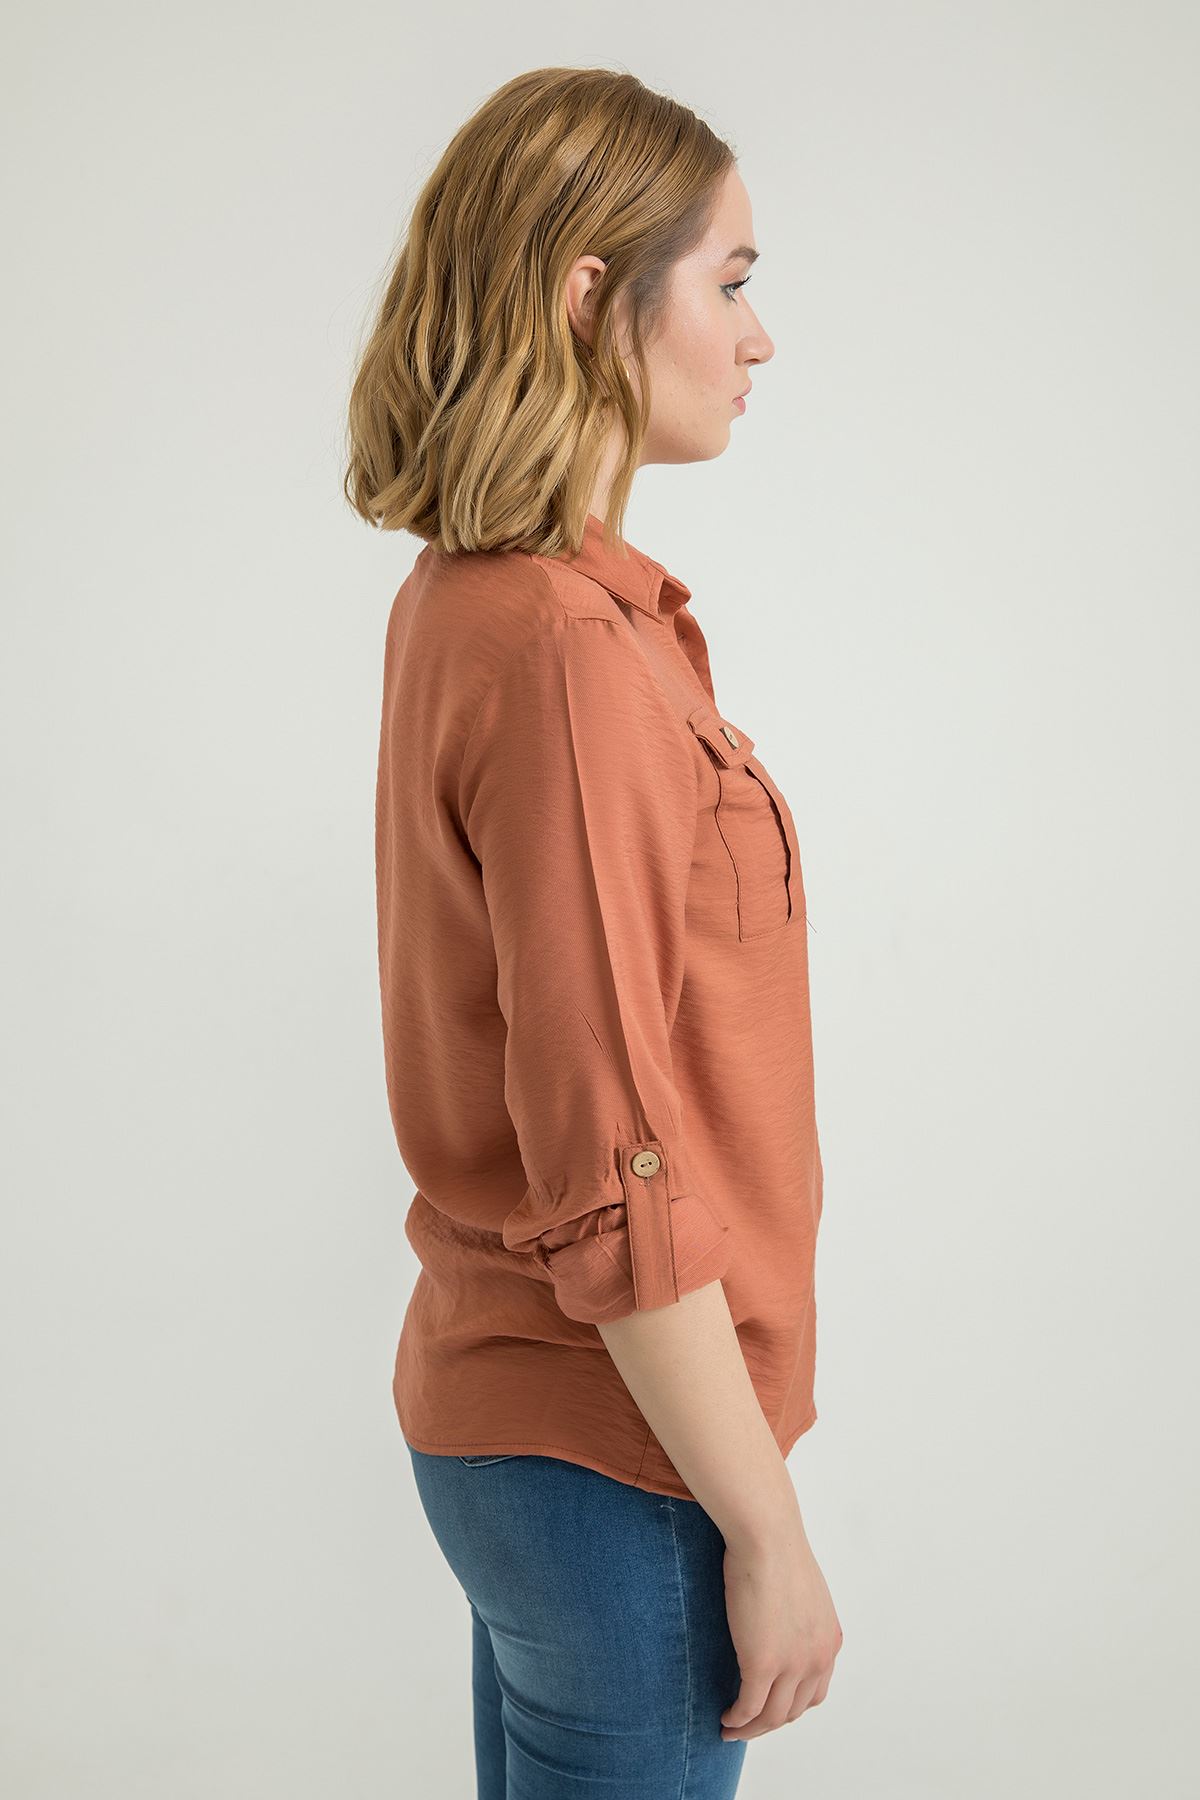 Aerobin Fabric Long Sleeve Shirt Collar Below Hip Full Fit Women'S Shirt - Onion 